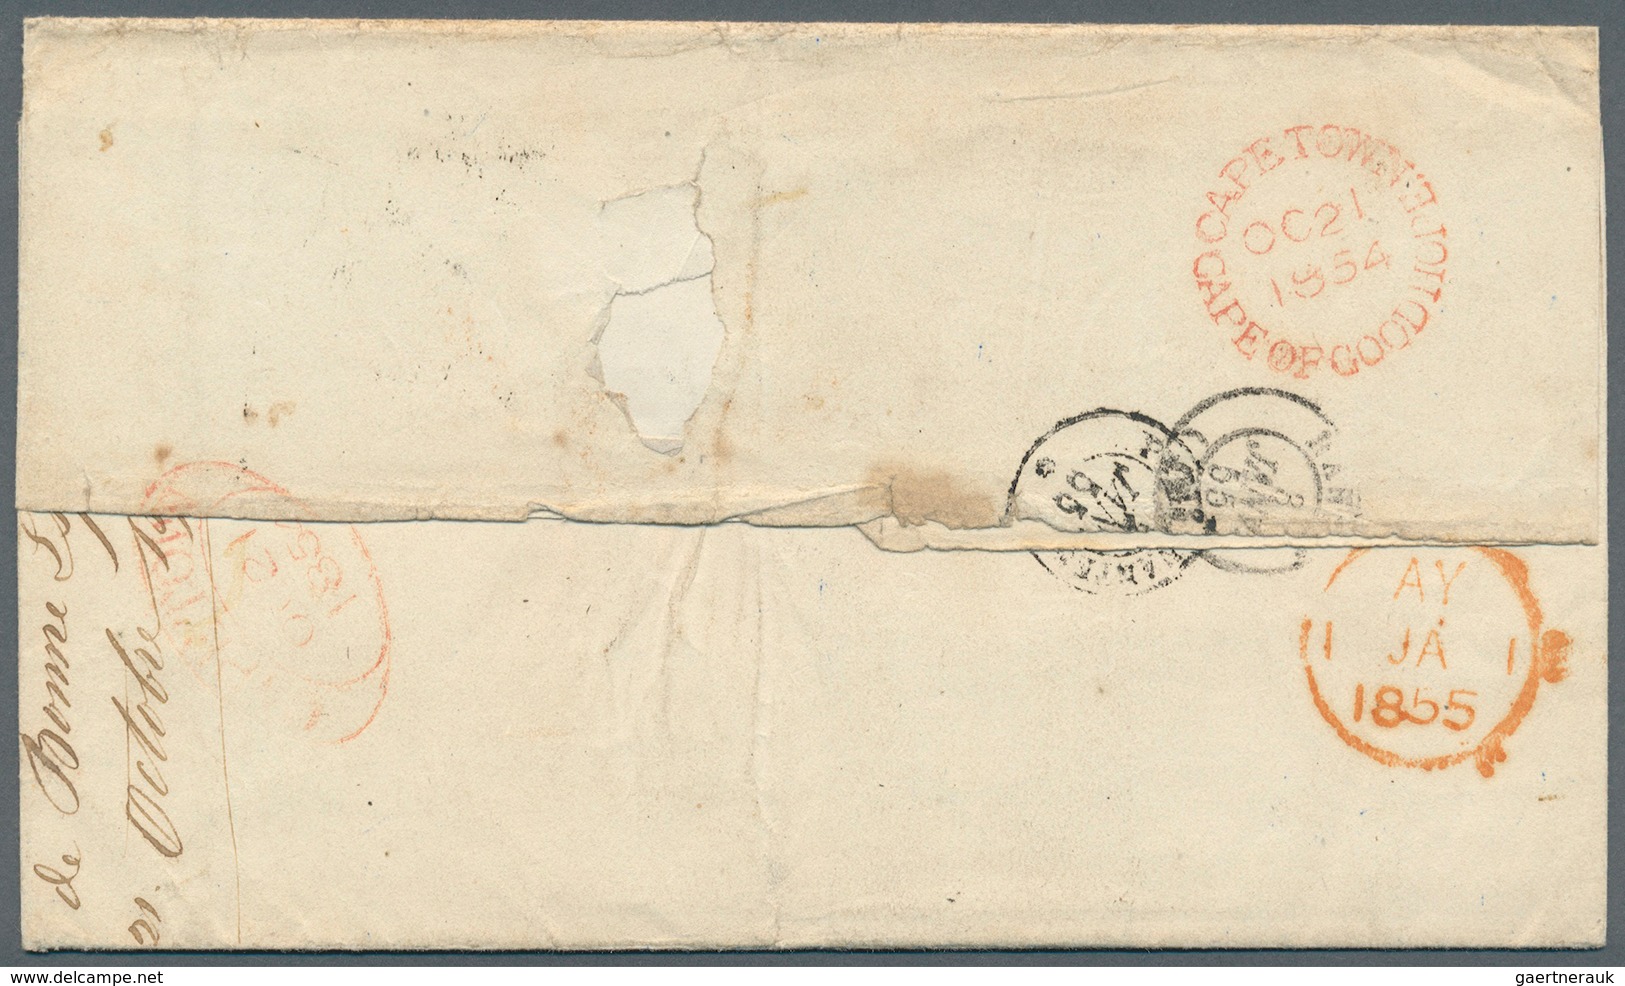 Kap Der Guten Hoffnung: 1854. Stampless 'Returned Letter' Envelope Written From The 'General Post Of - Cap De Bonne Espérance (1853-1904)